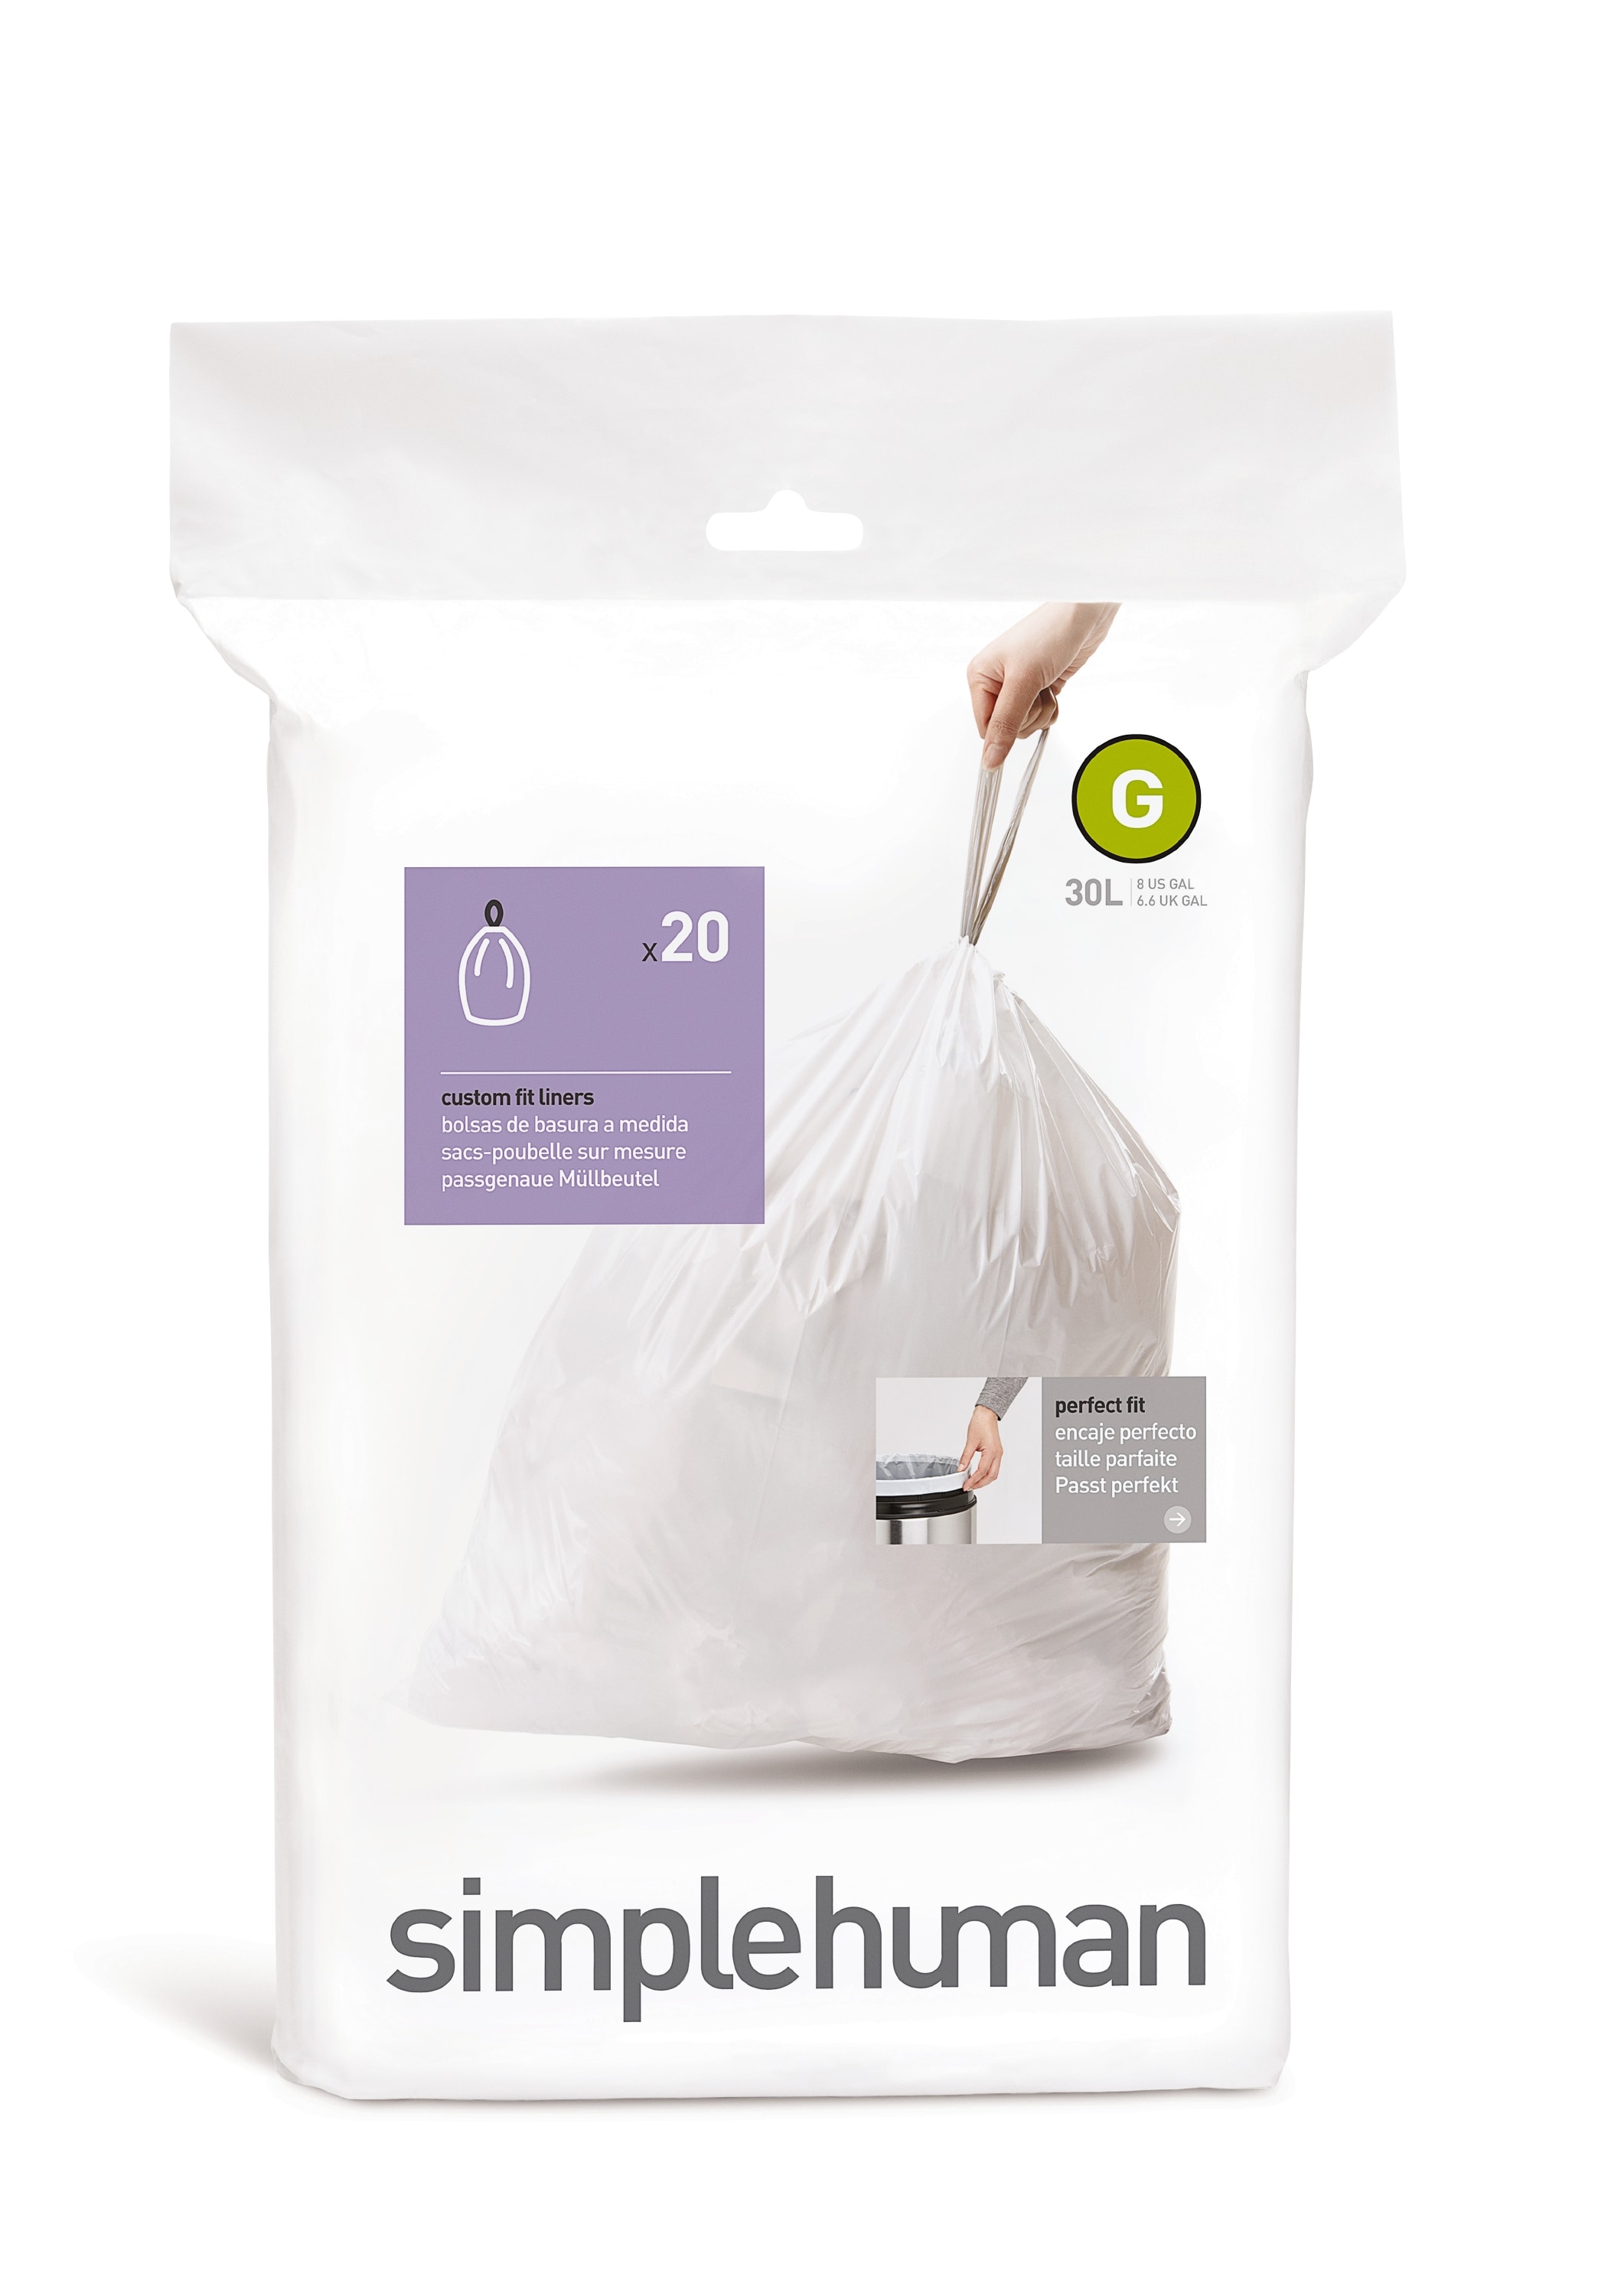 Simple Human Drawstring Trash Bags 100 pk Custom Fit 8 Gallon Garbage Can Code G 